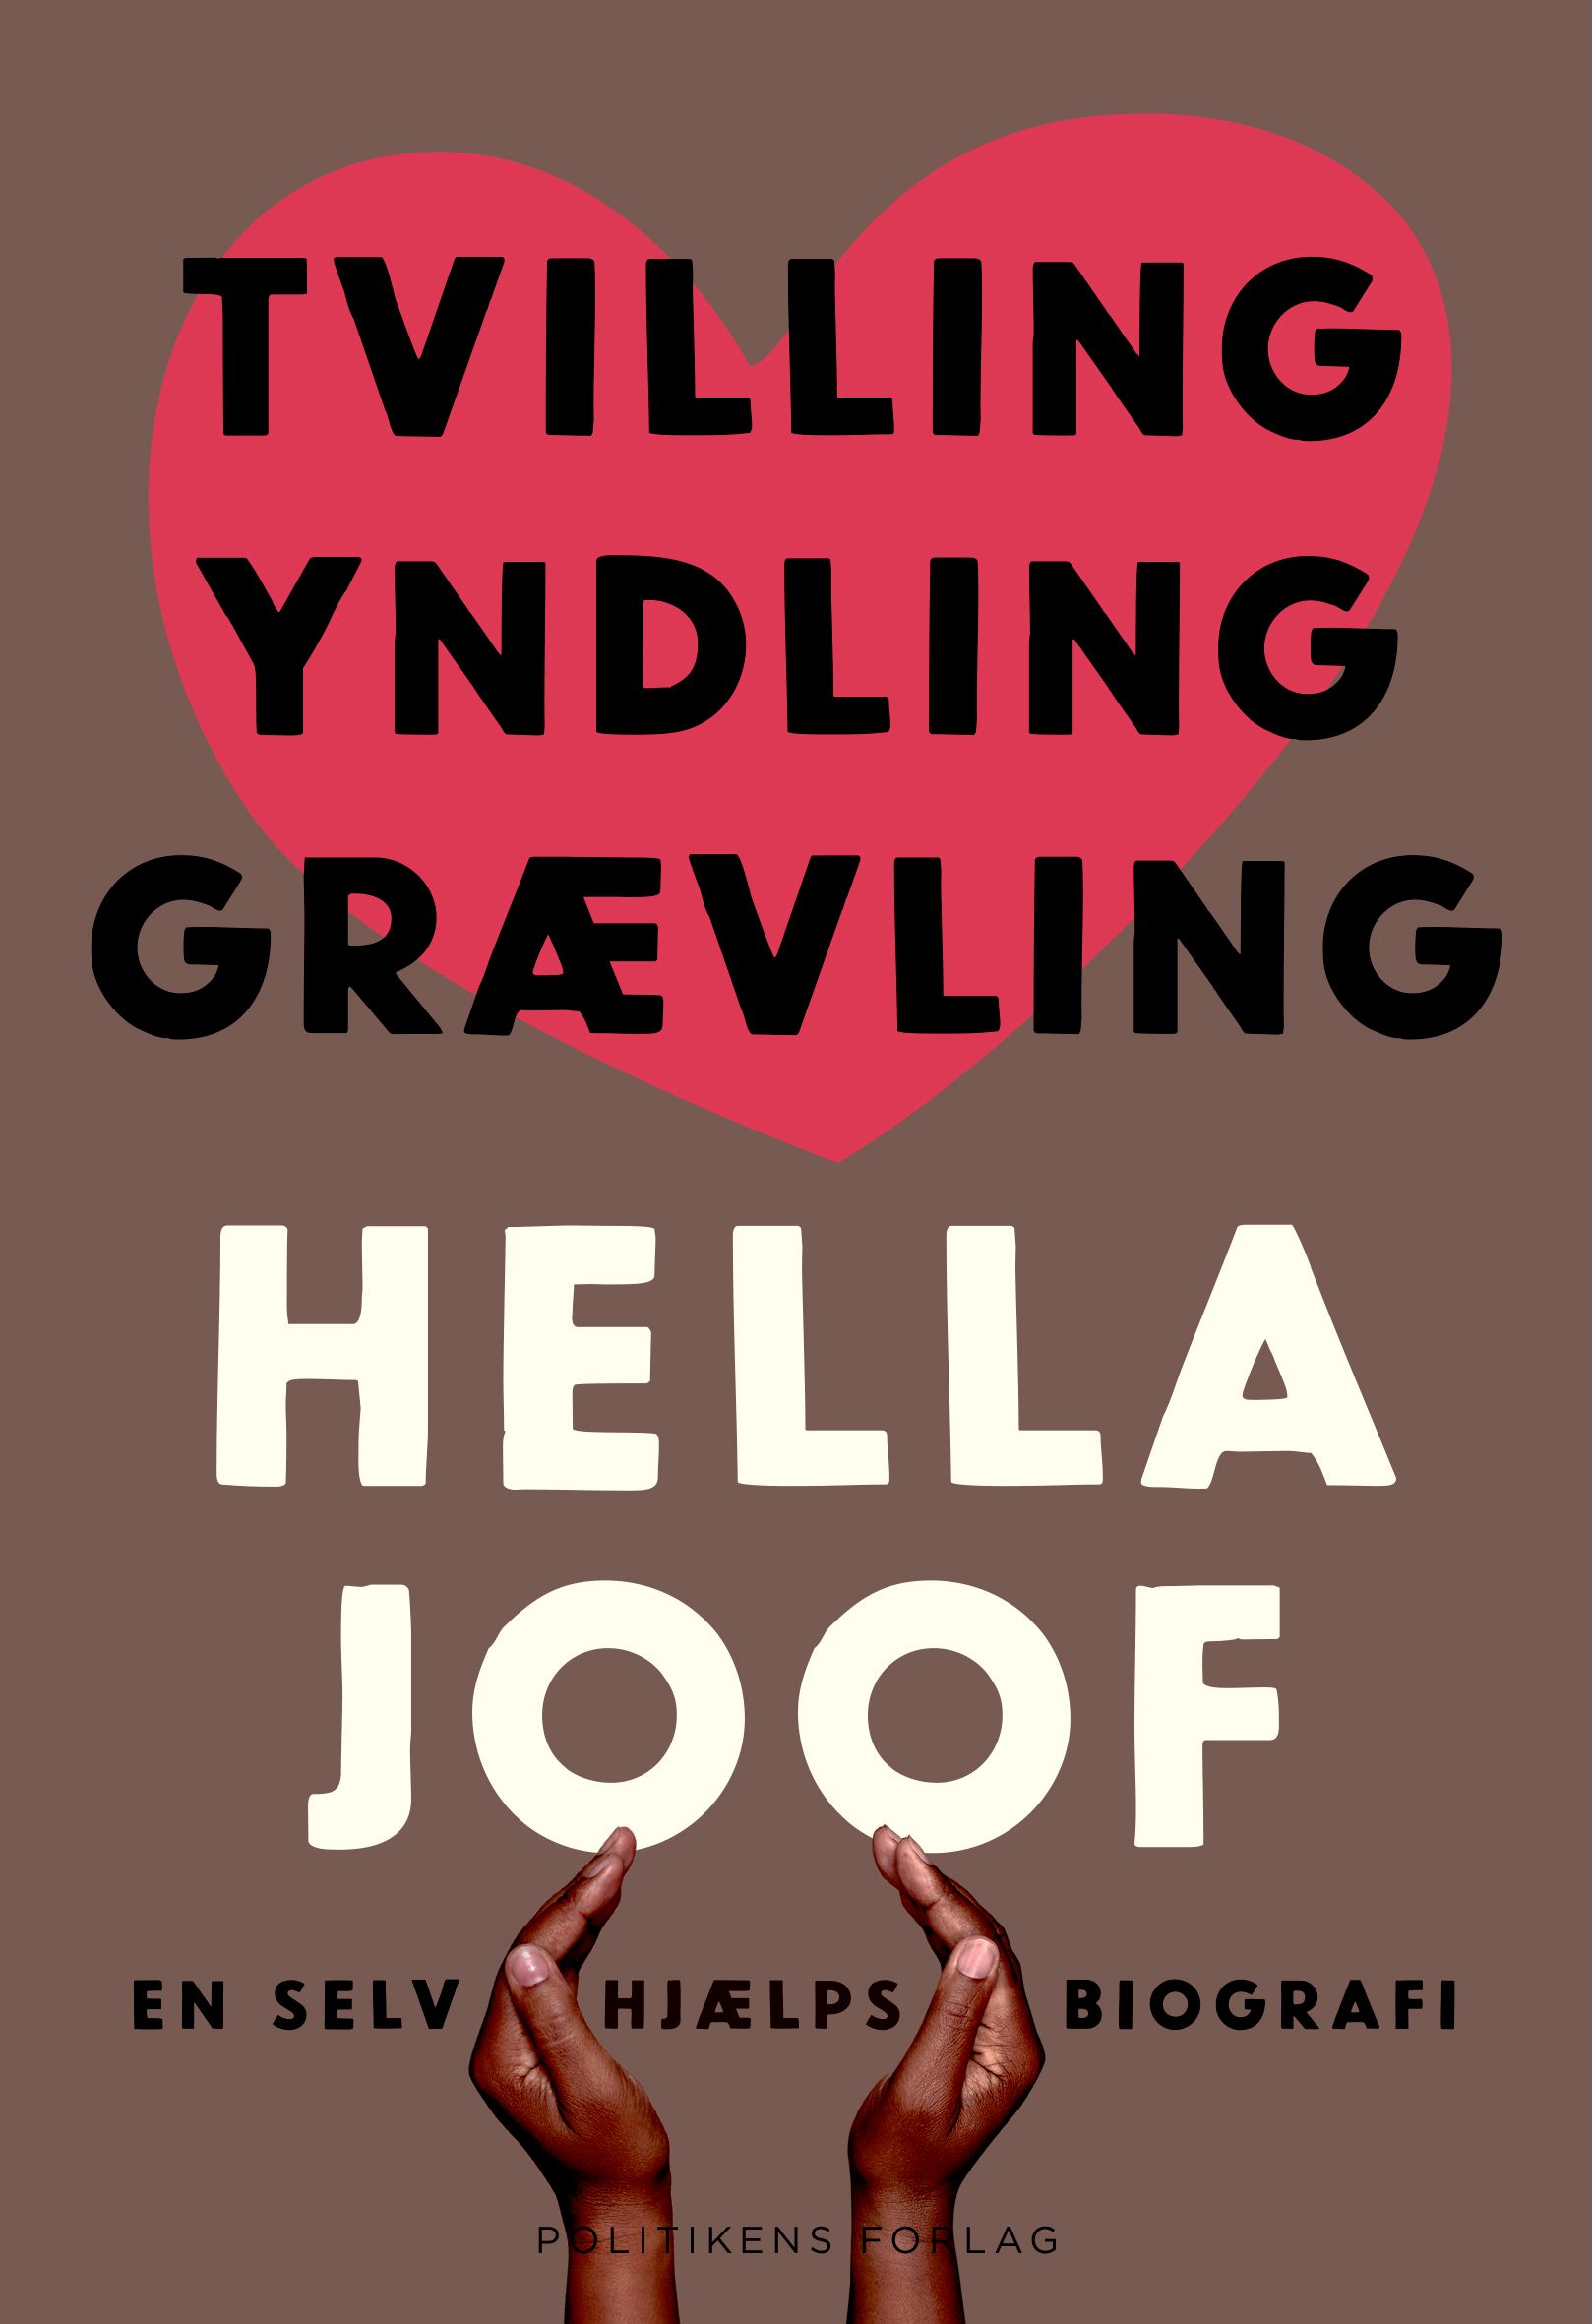 Tvilling Yndling Grævling, eBook by Hella Joof